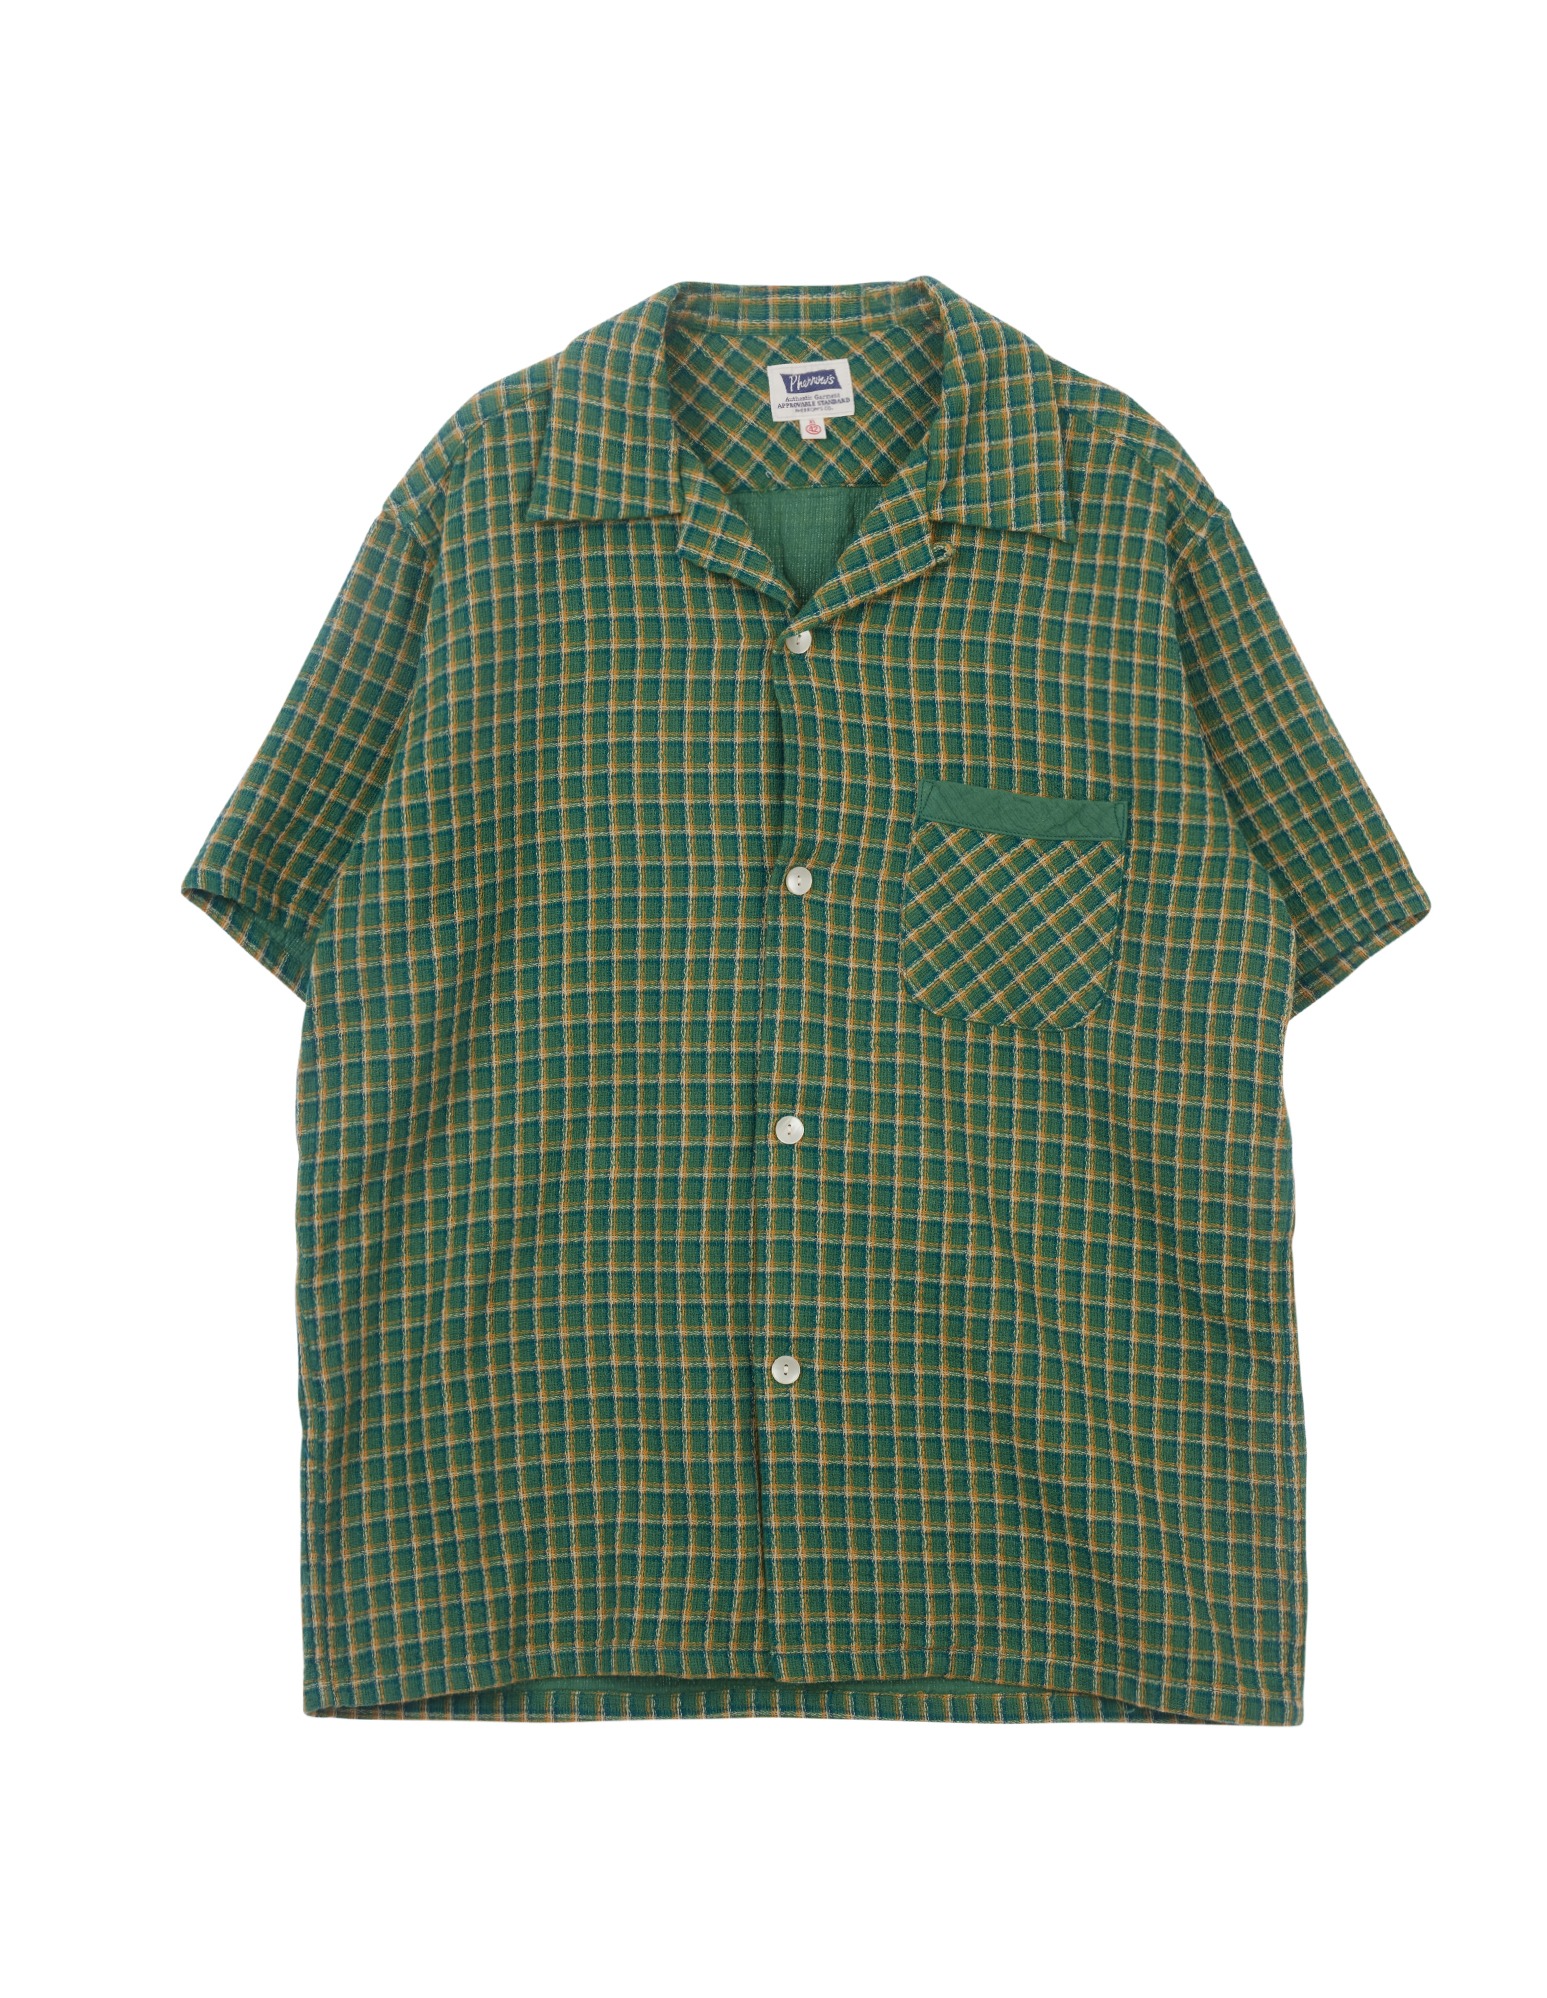 Open Collar S/S Check Shirts (Green)